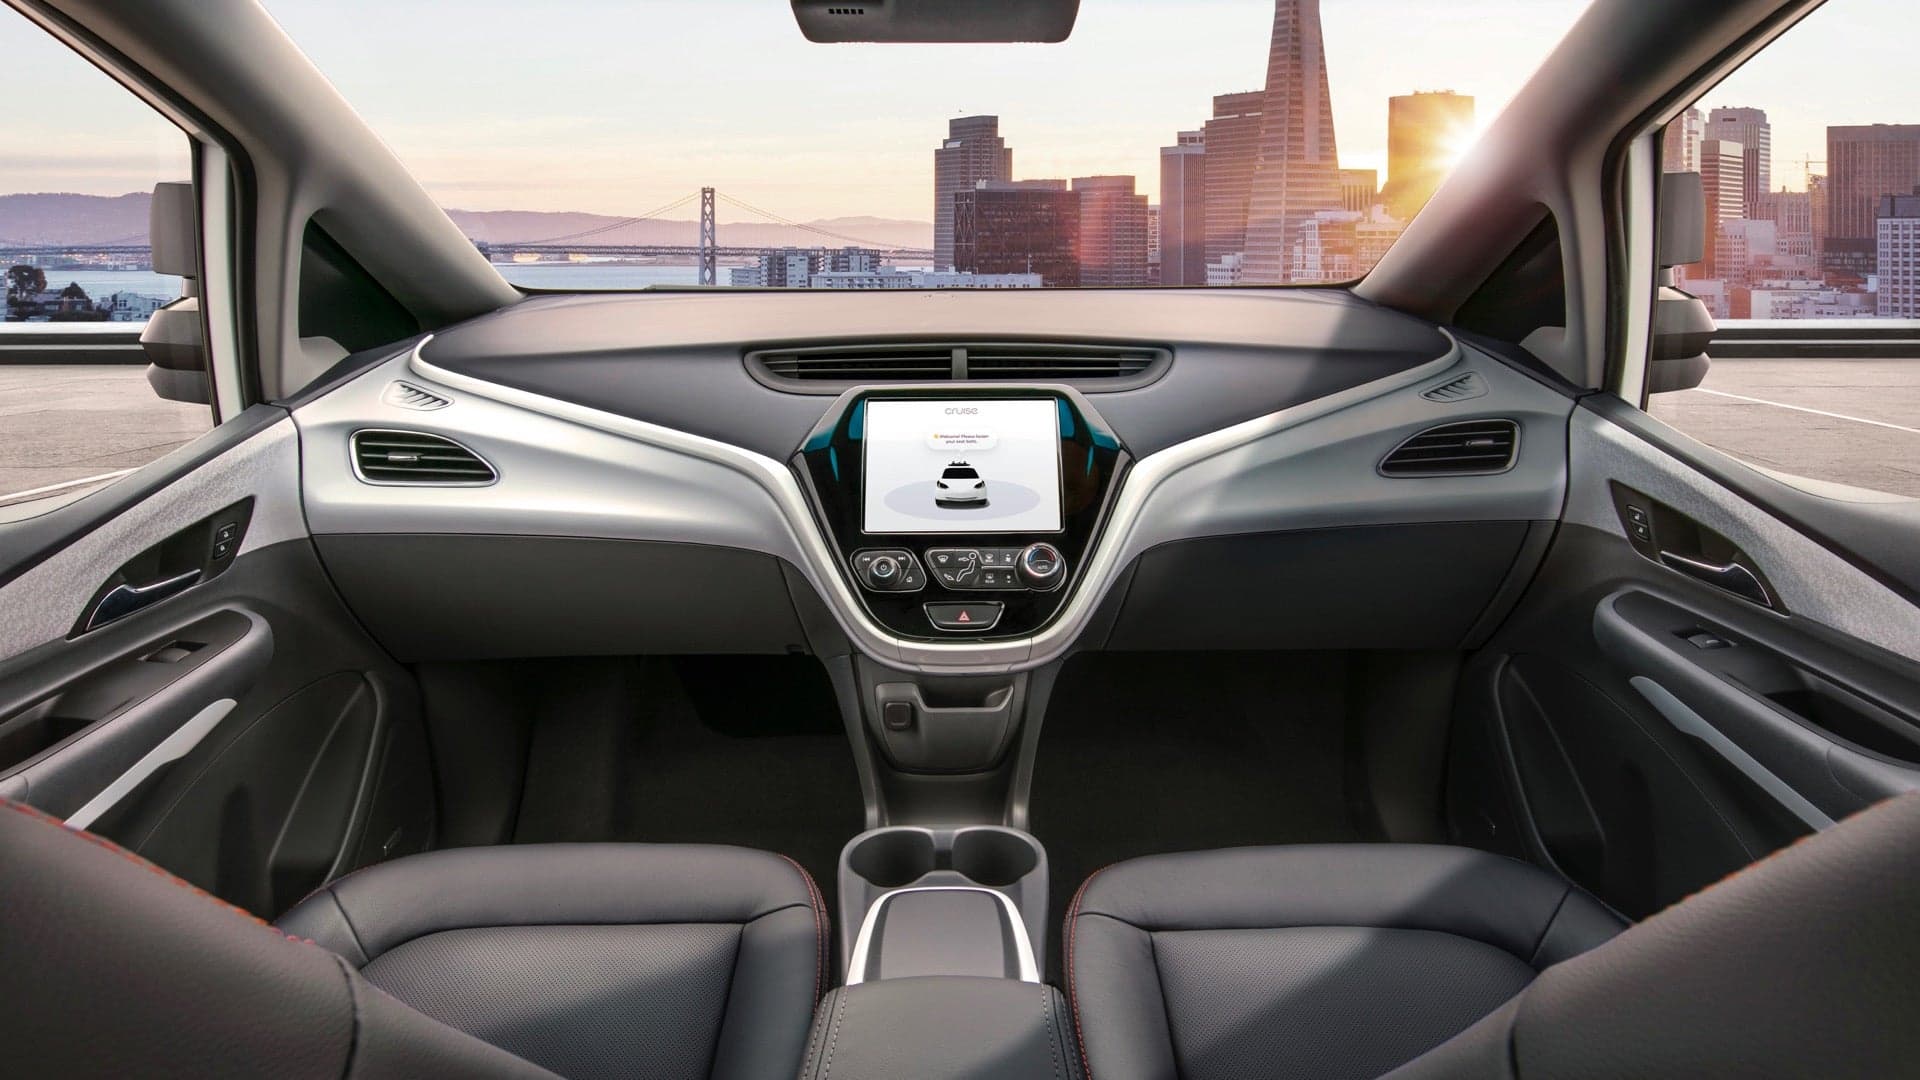 GM’s Next-Generation Self-Driving Car Has No Steering Wheel